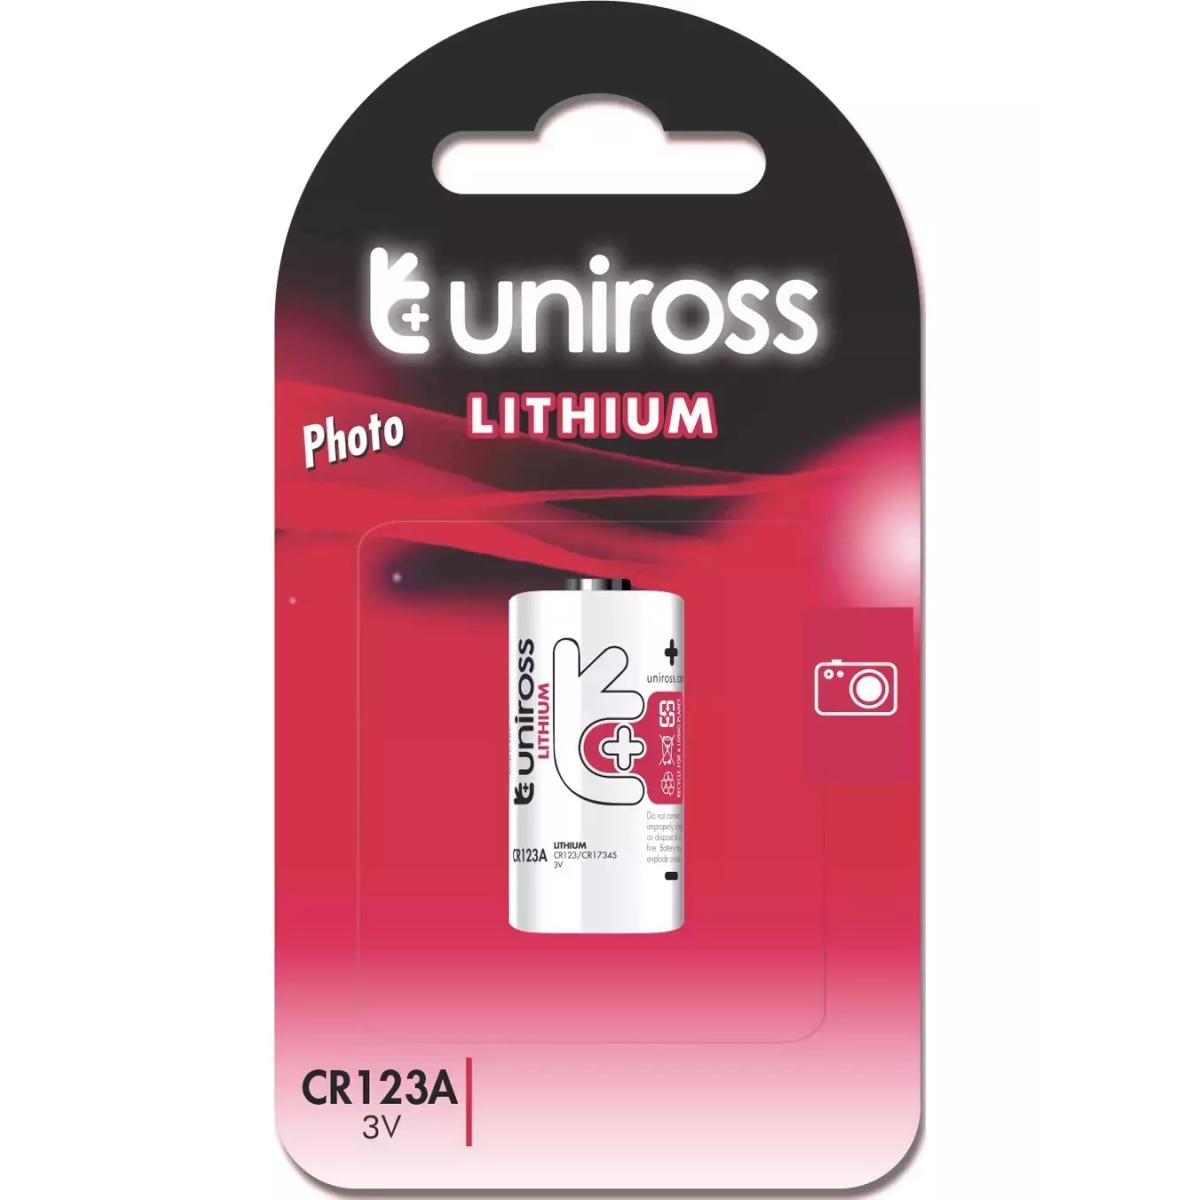 Uniross CR123A Industrial Lithium Battery